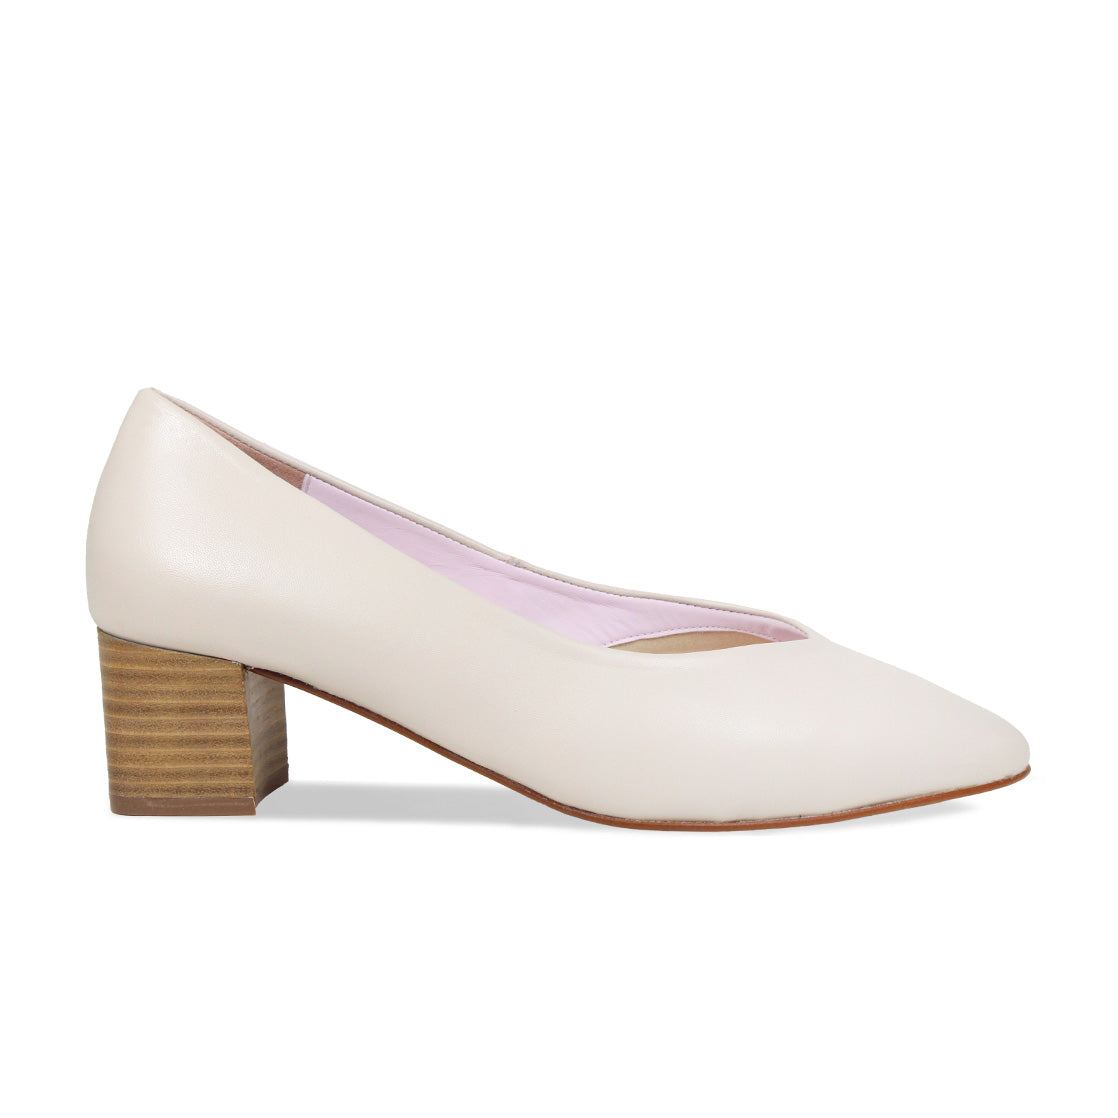 Women's Platform High Heels Shiny Leather Block Heel Shoes Party Round Toe  Pumps | eBay